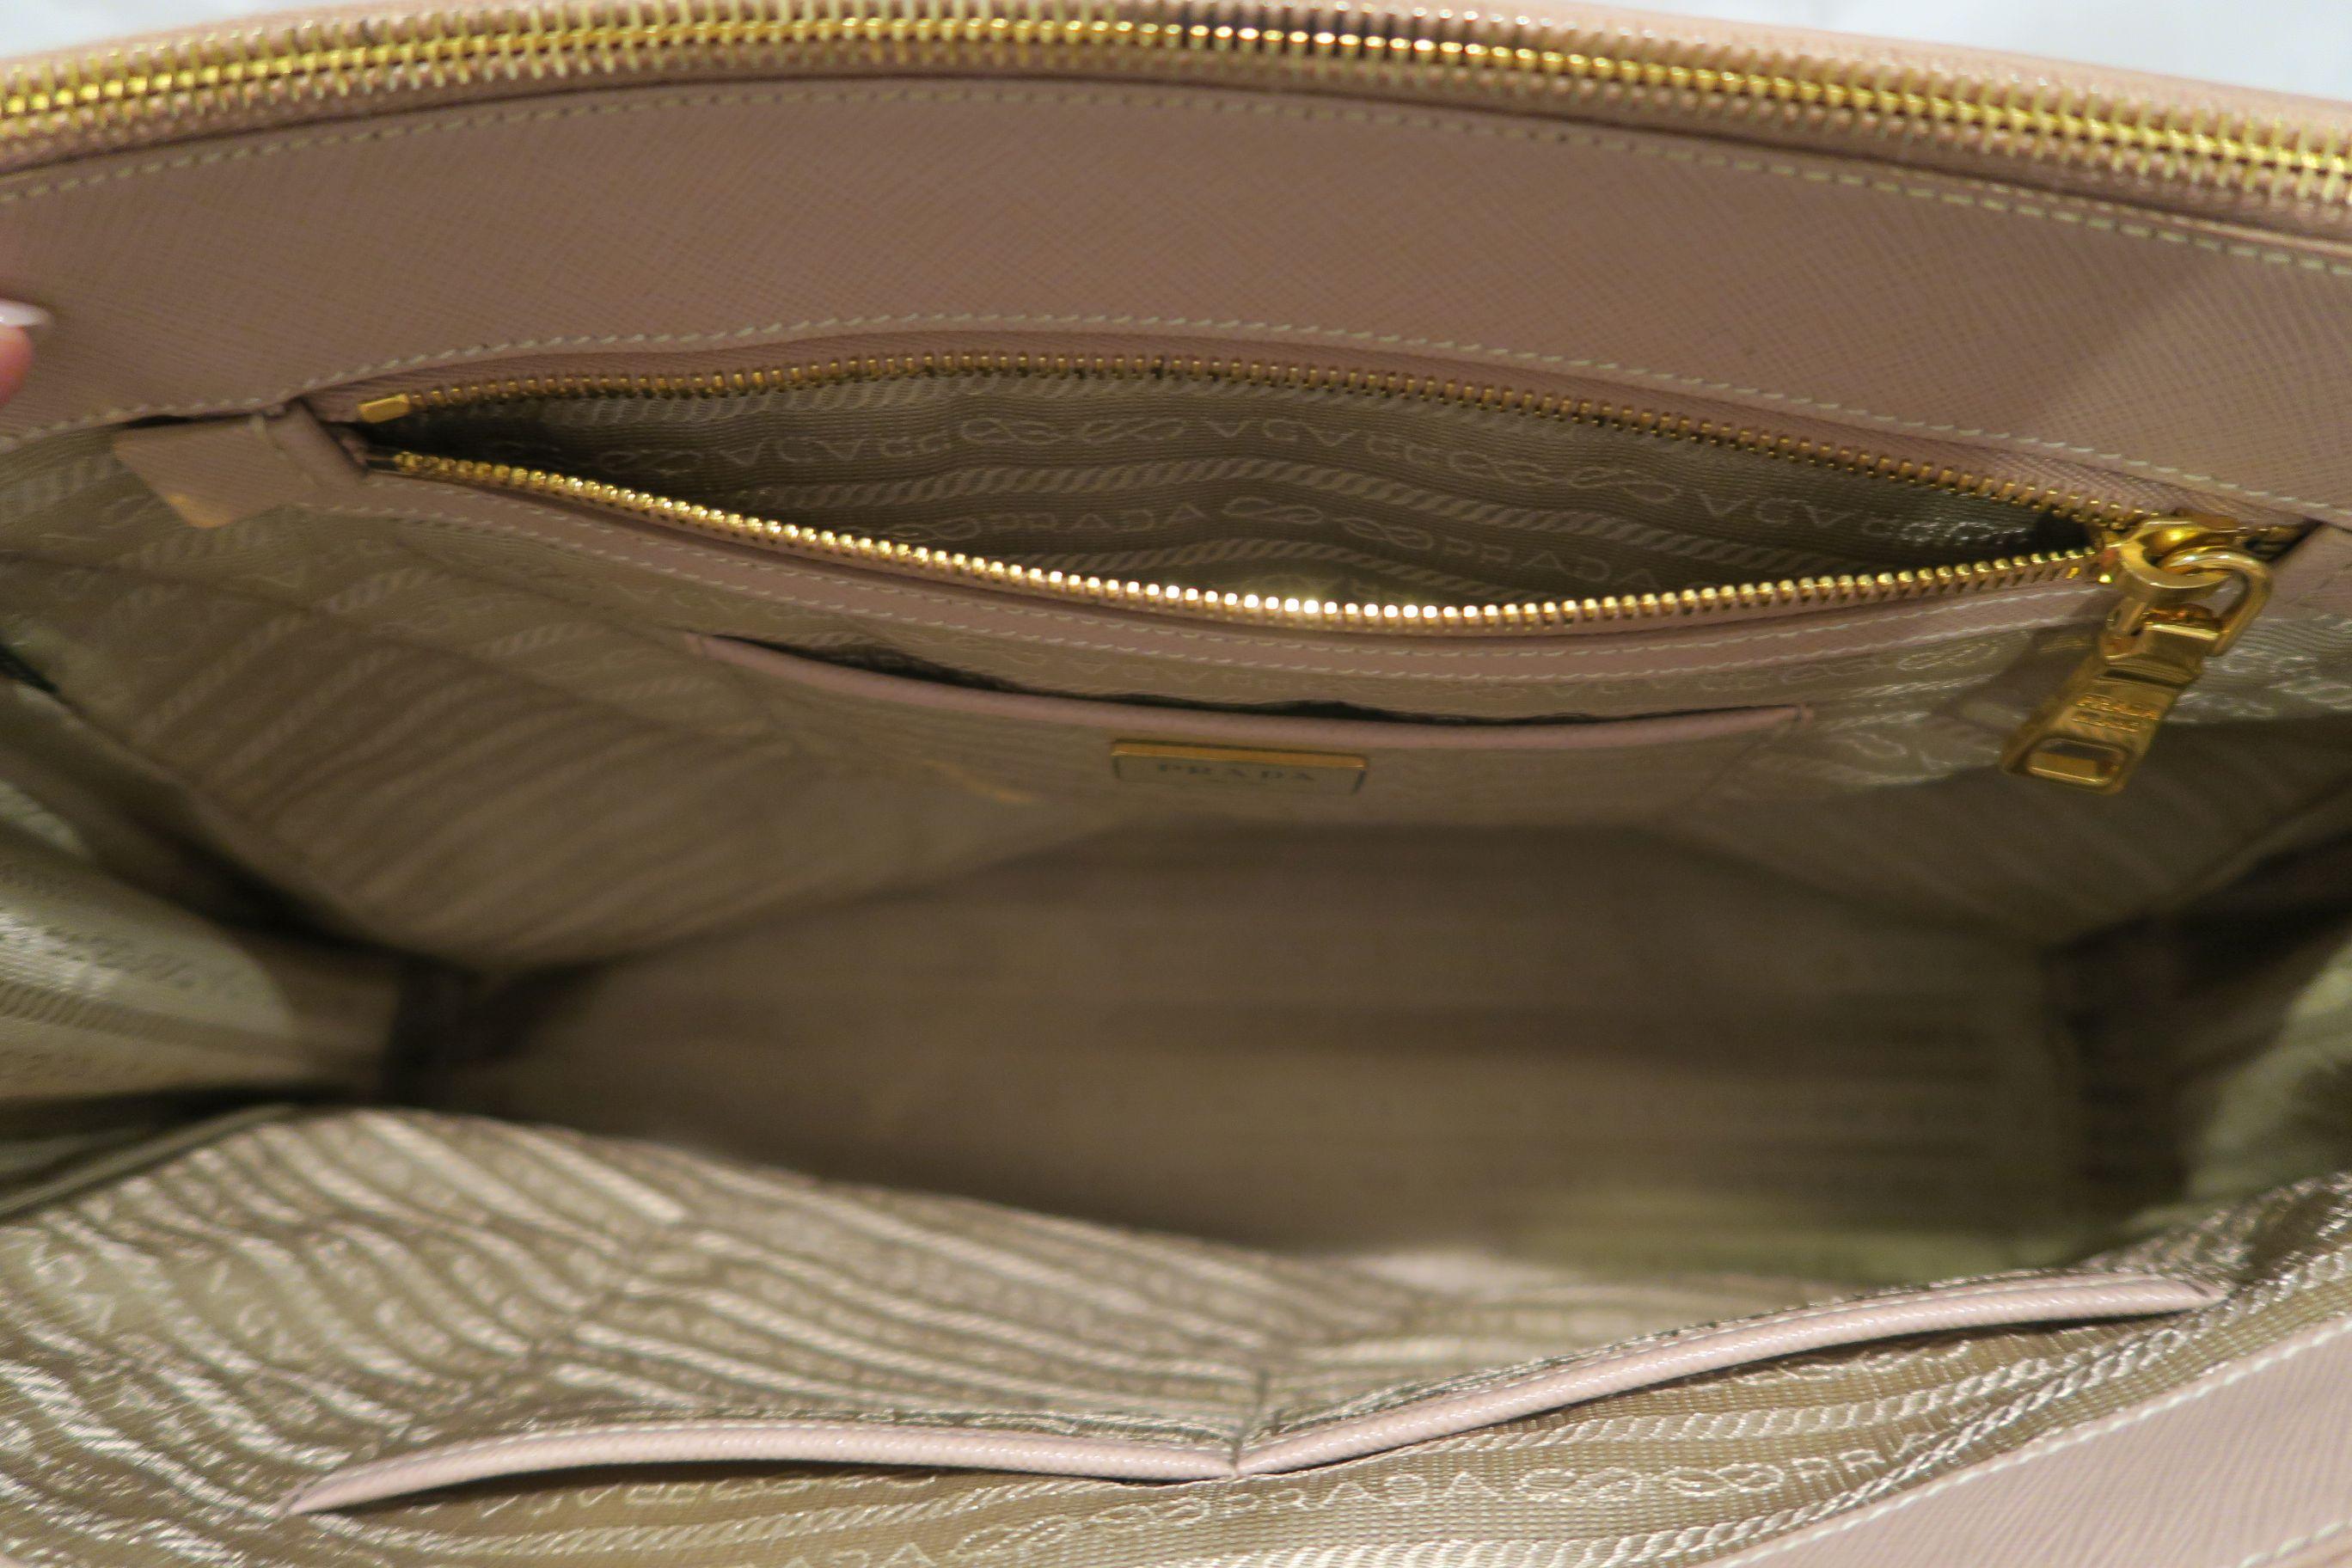 Prada Saffiano handbag, medium size bag, 13.5" x 9" x 6", three utility pockets, small zip pocket